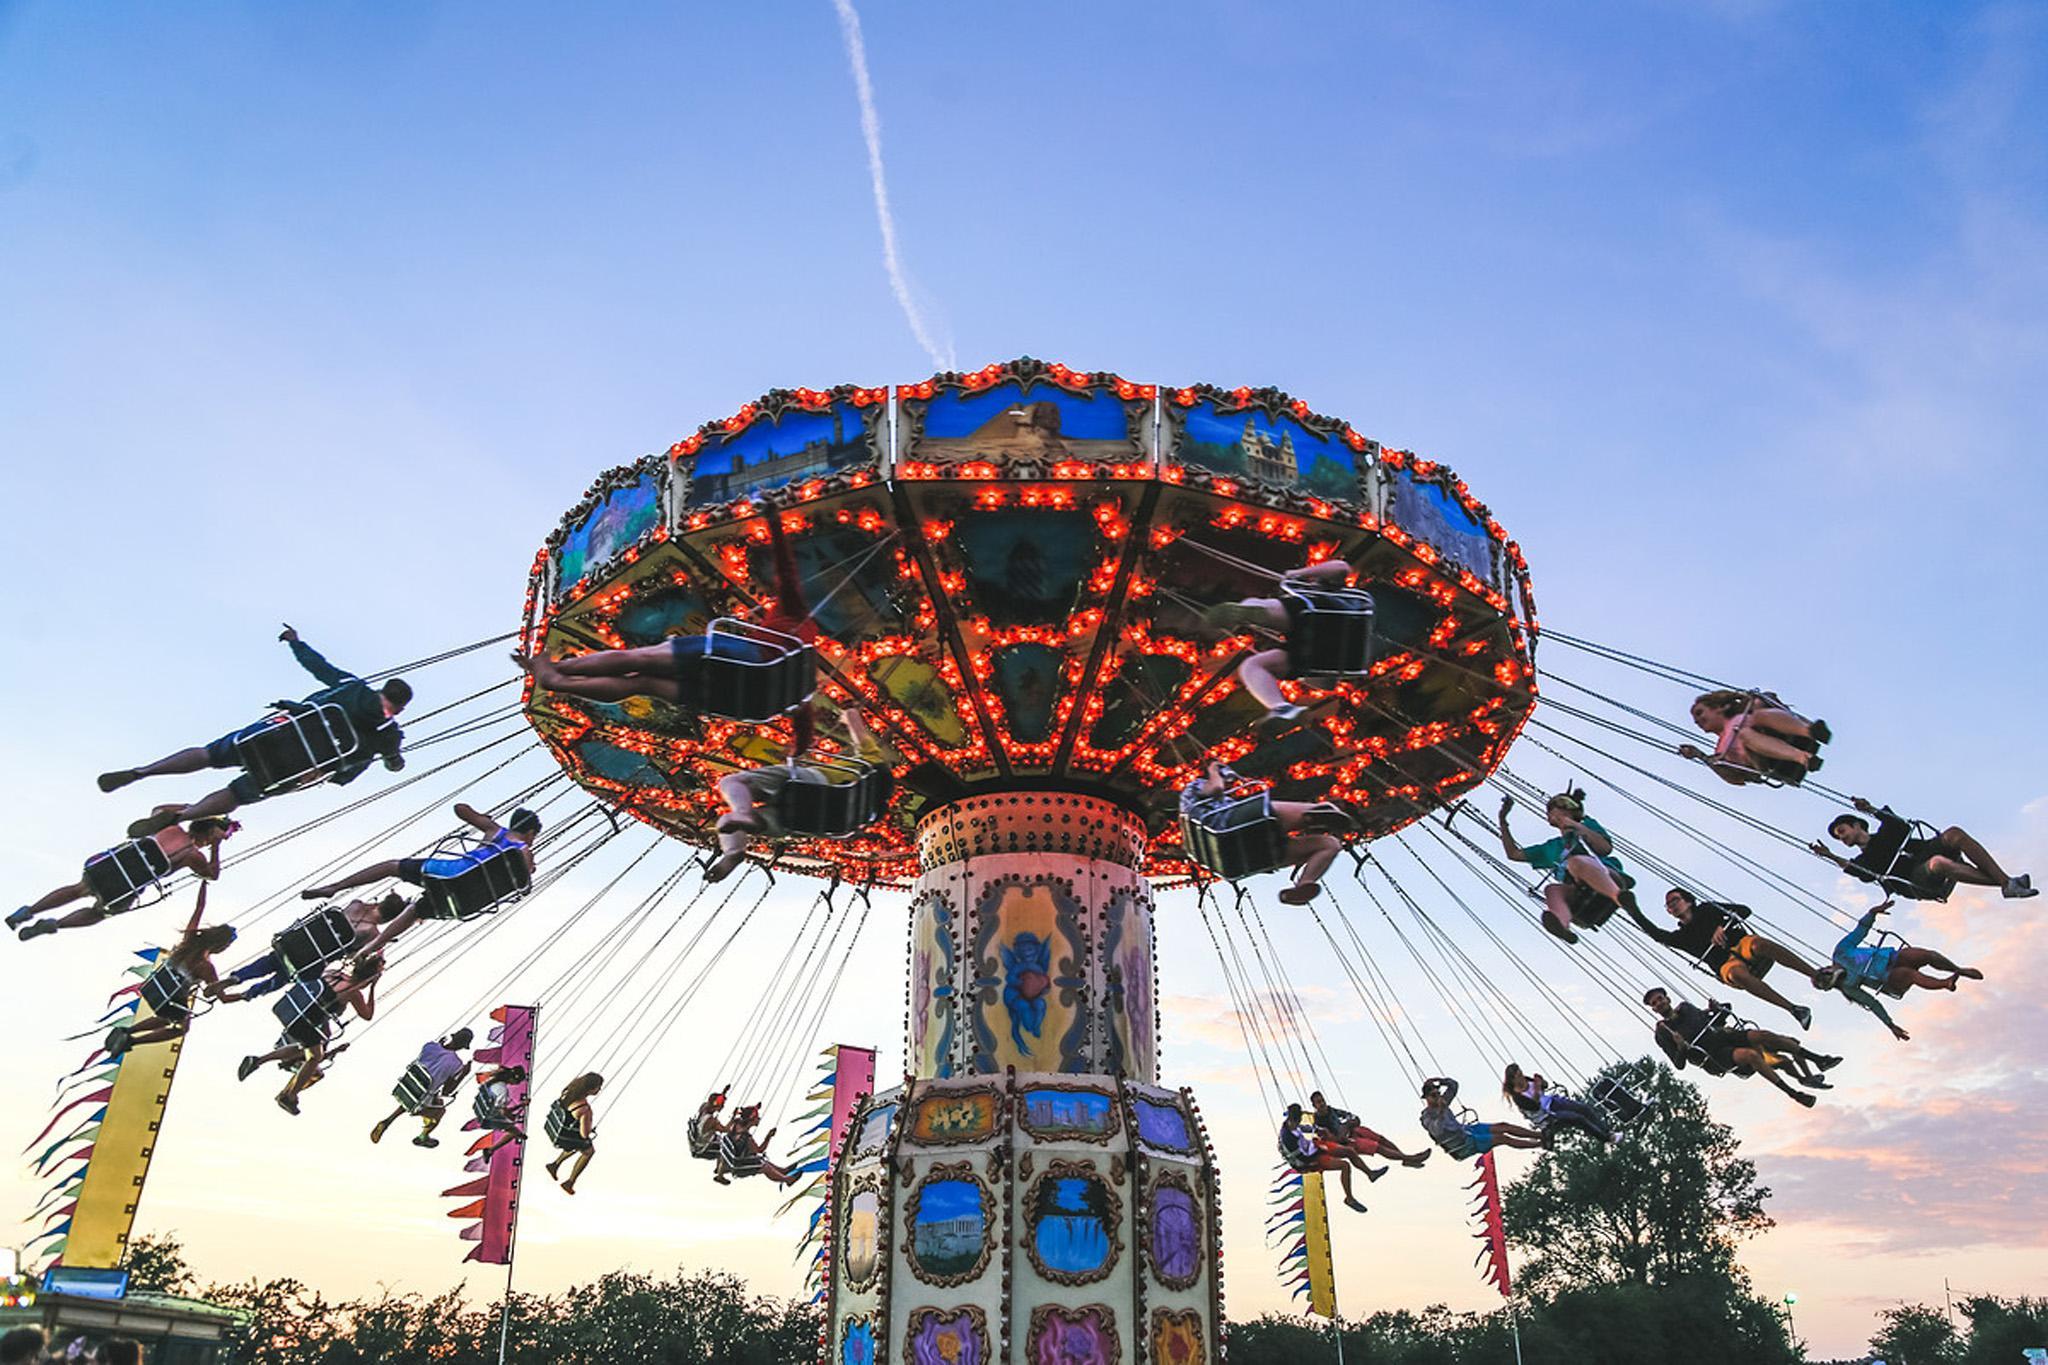 Festival-goers enjoy a fairground ride at Secret Garden Party 2014